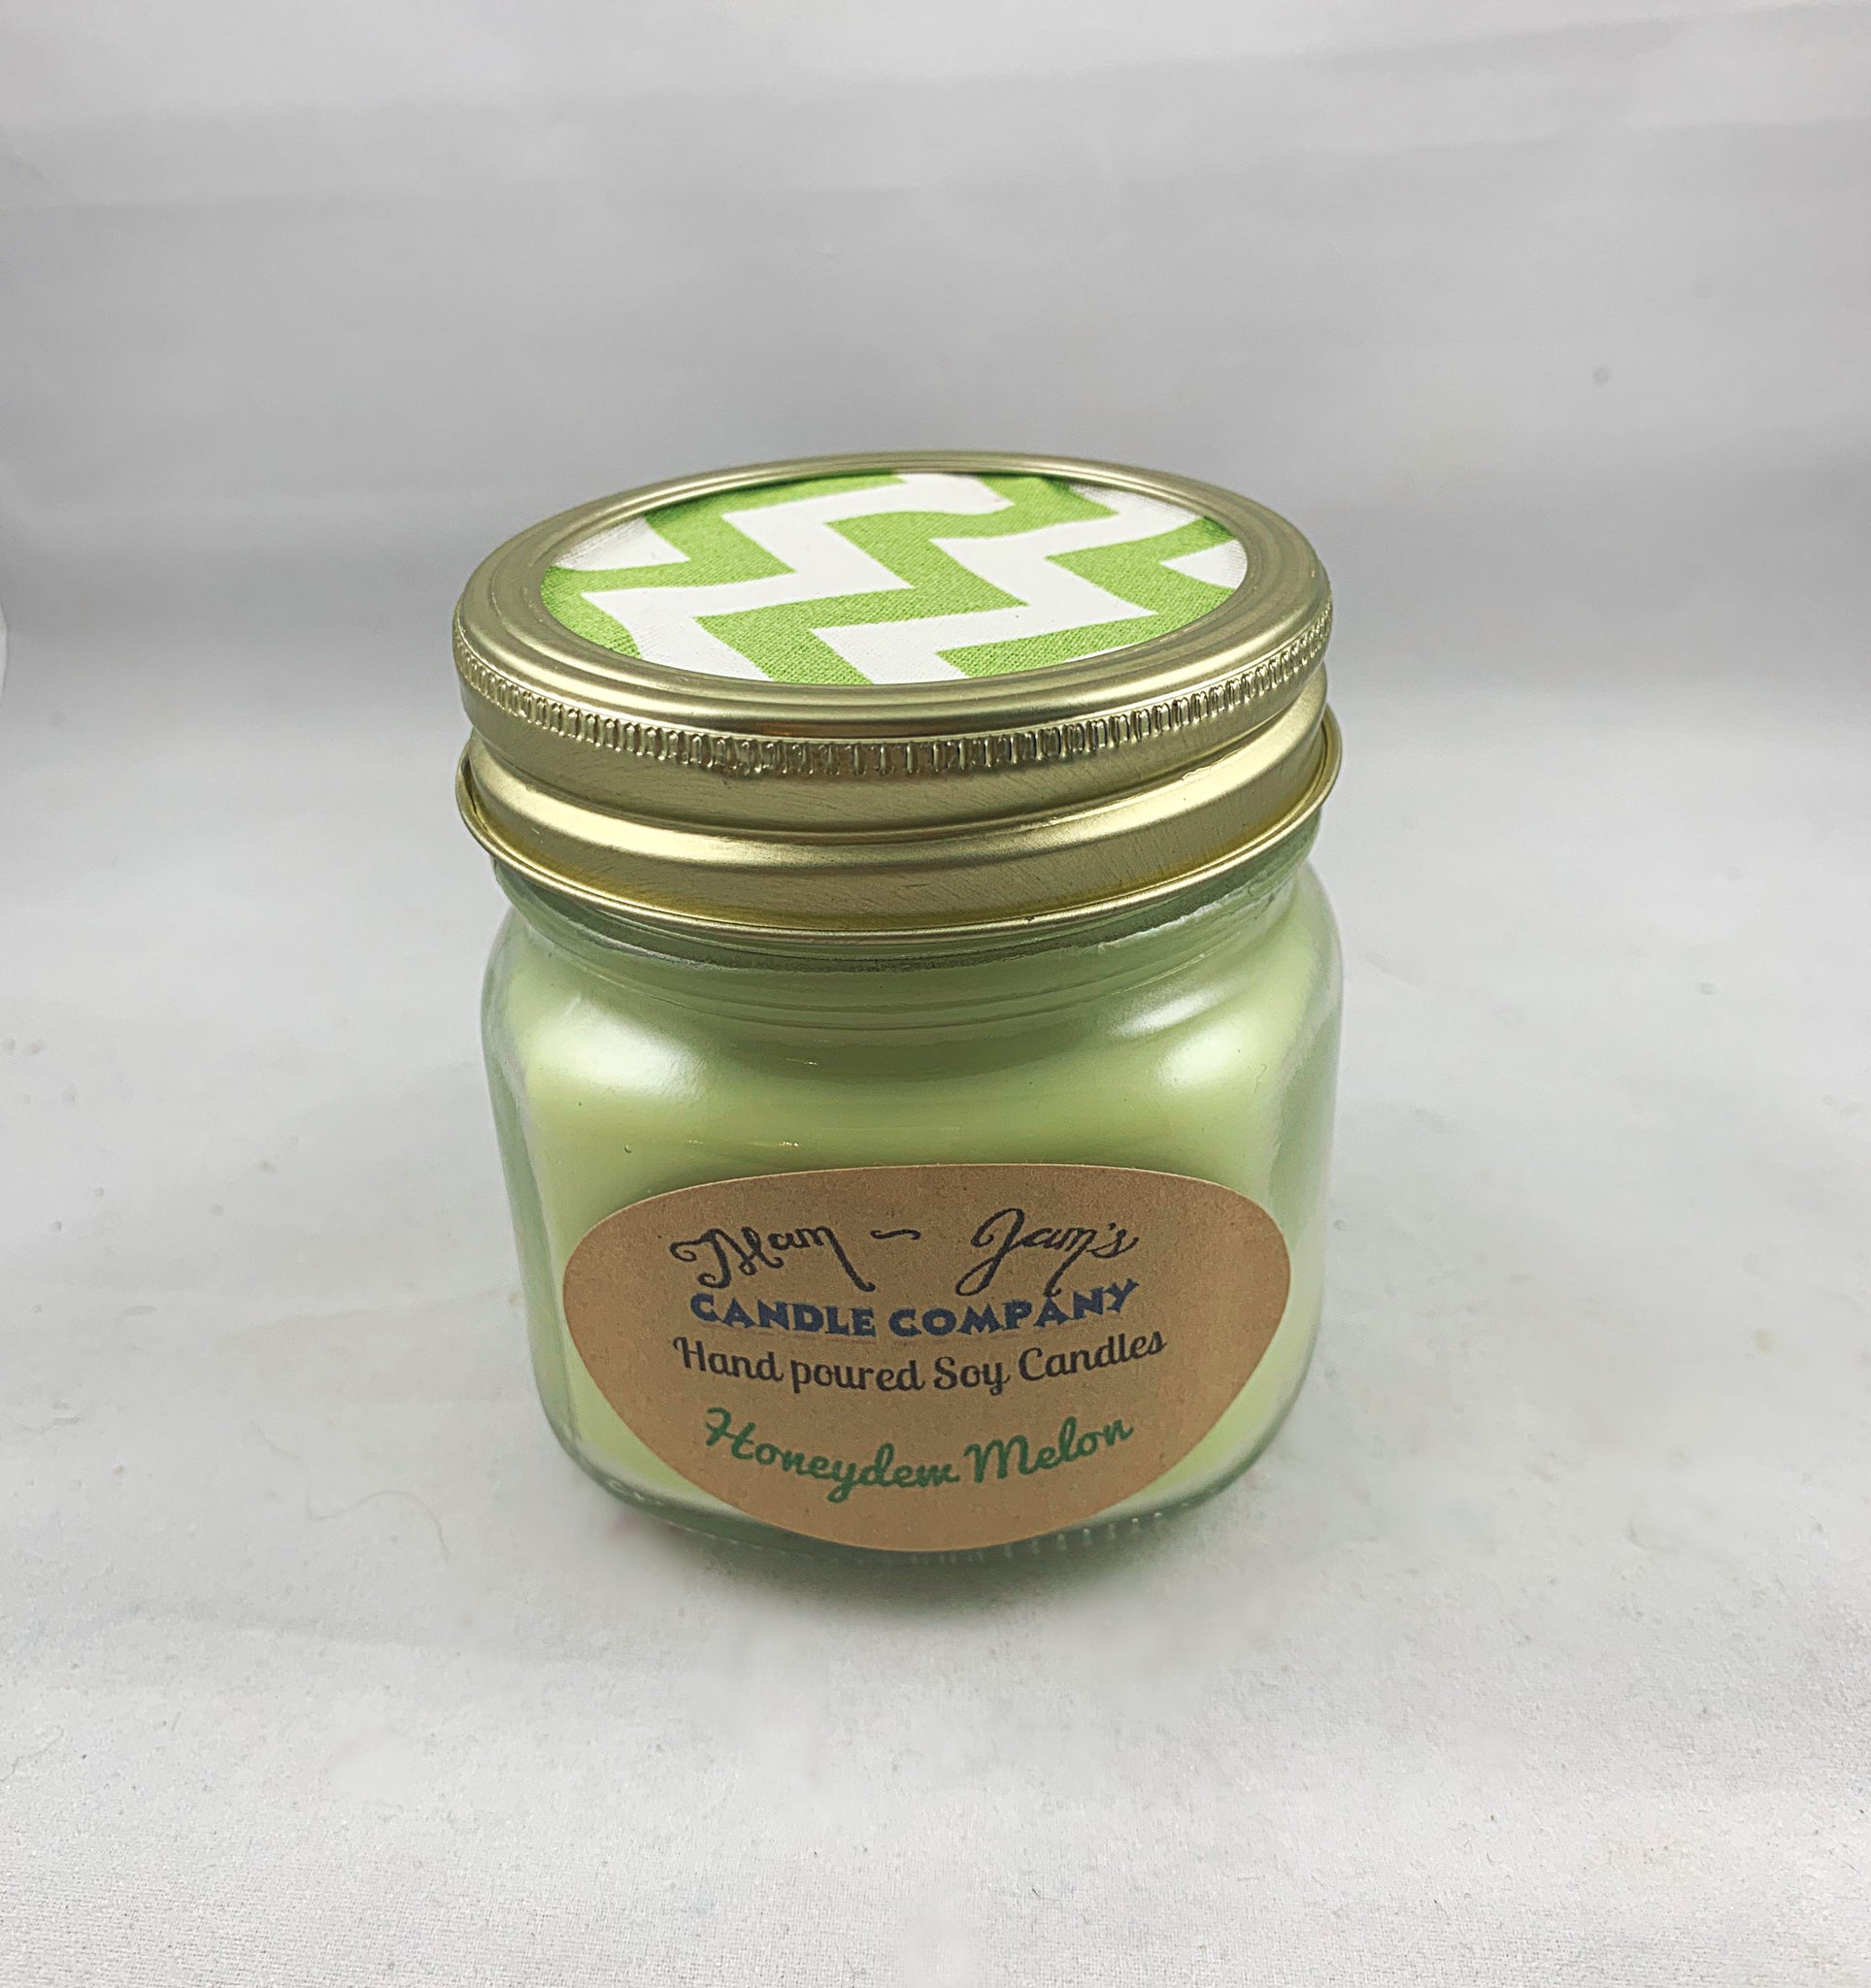 Honey Dew Melon 16oz – Just Candles